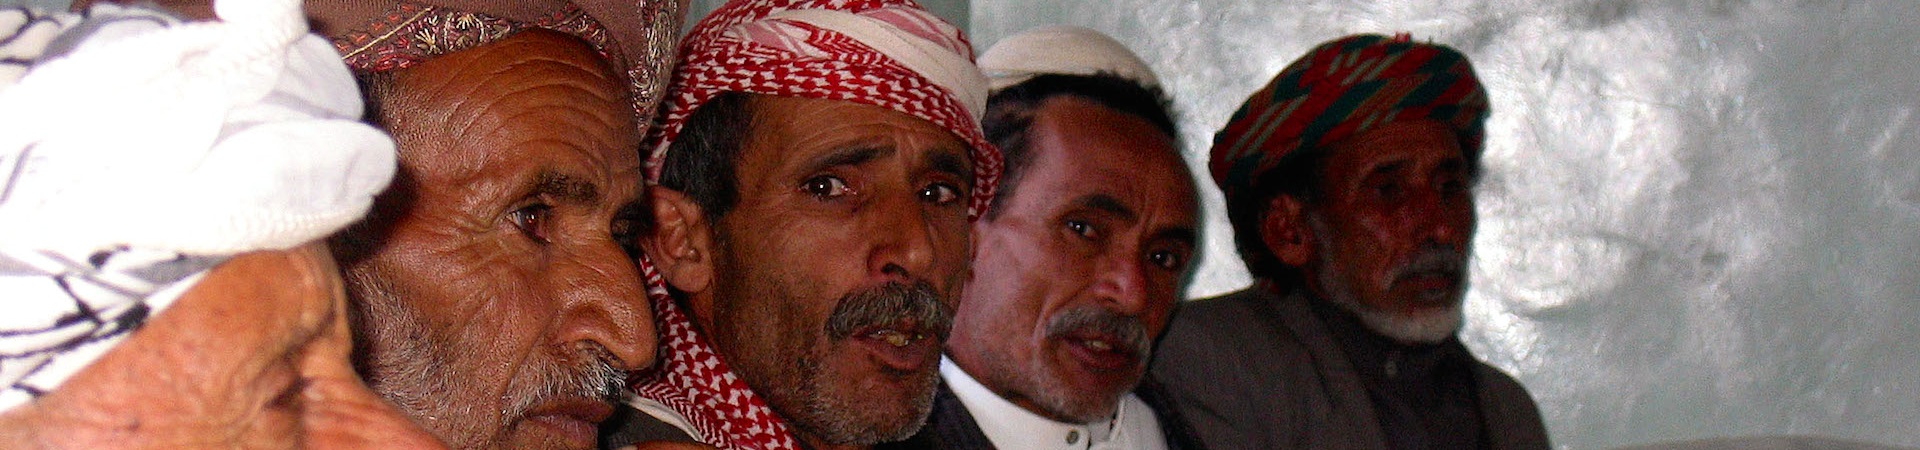 Men chewing khat (qat), North Yemen.